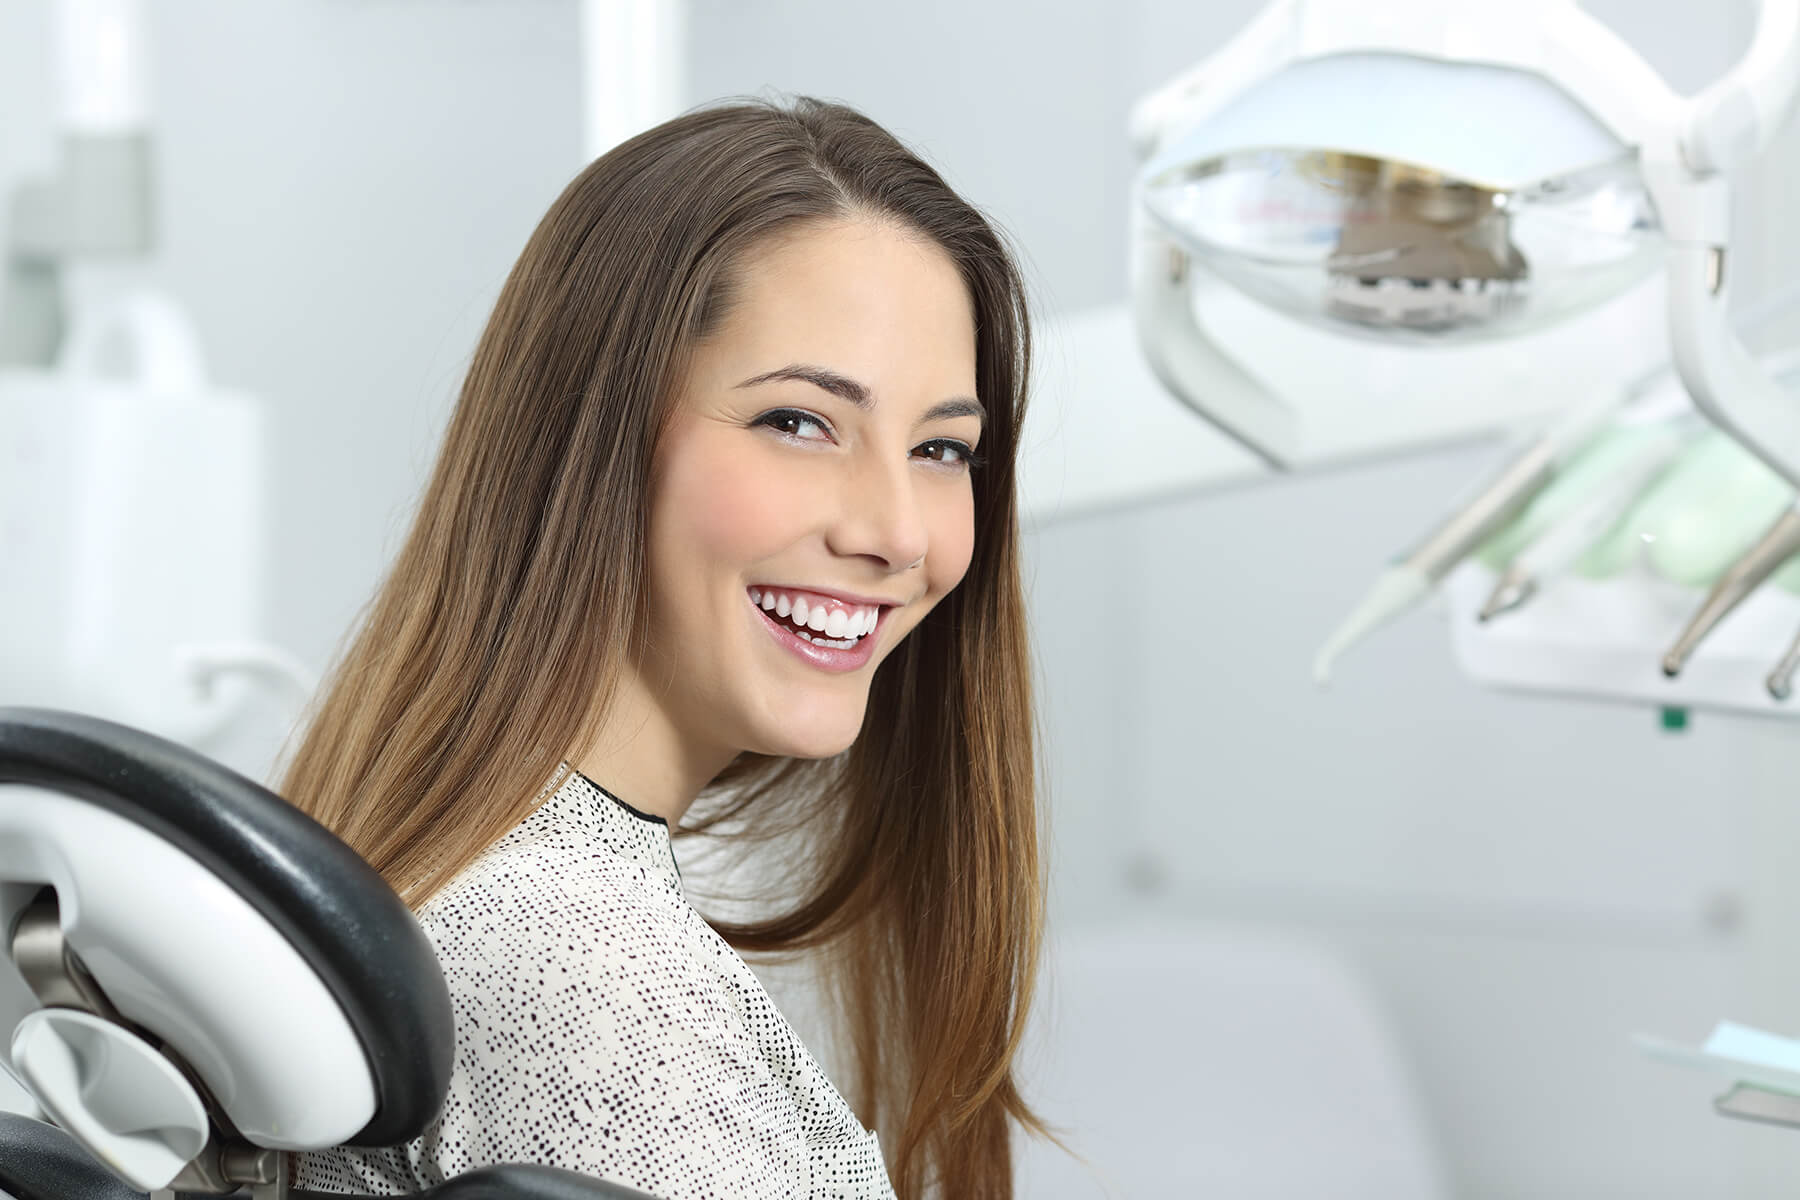 Dental patient showing off her smile